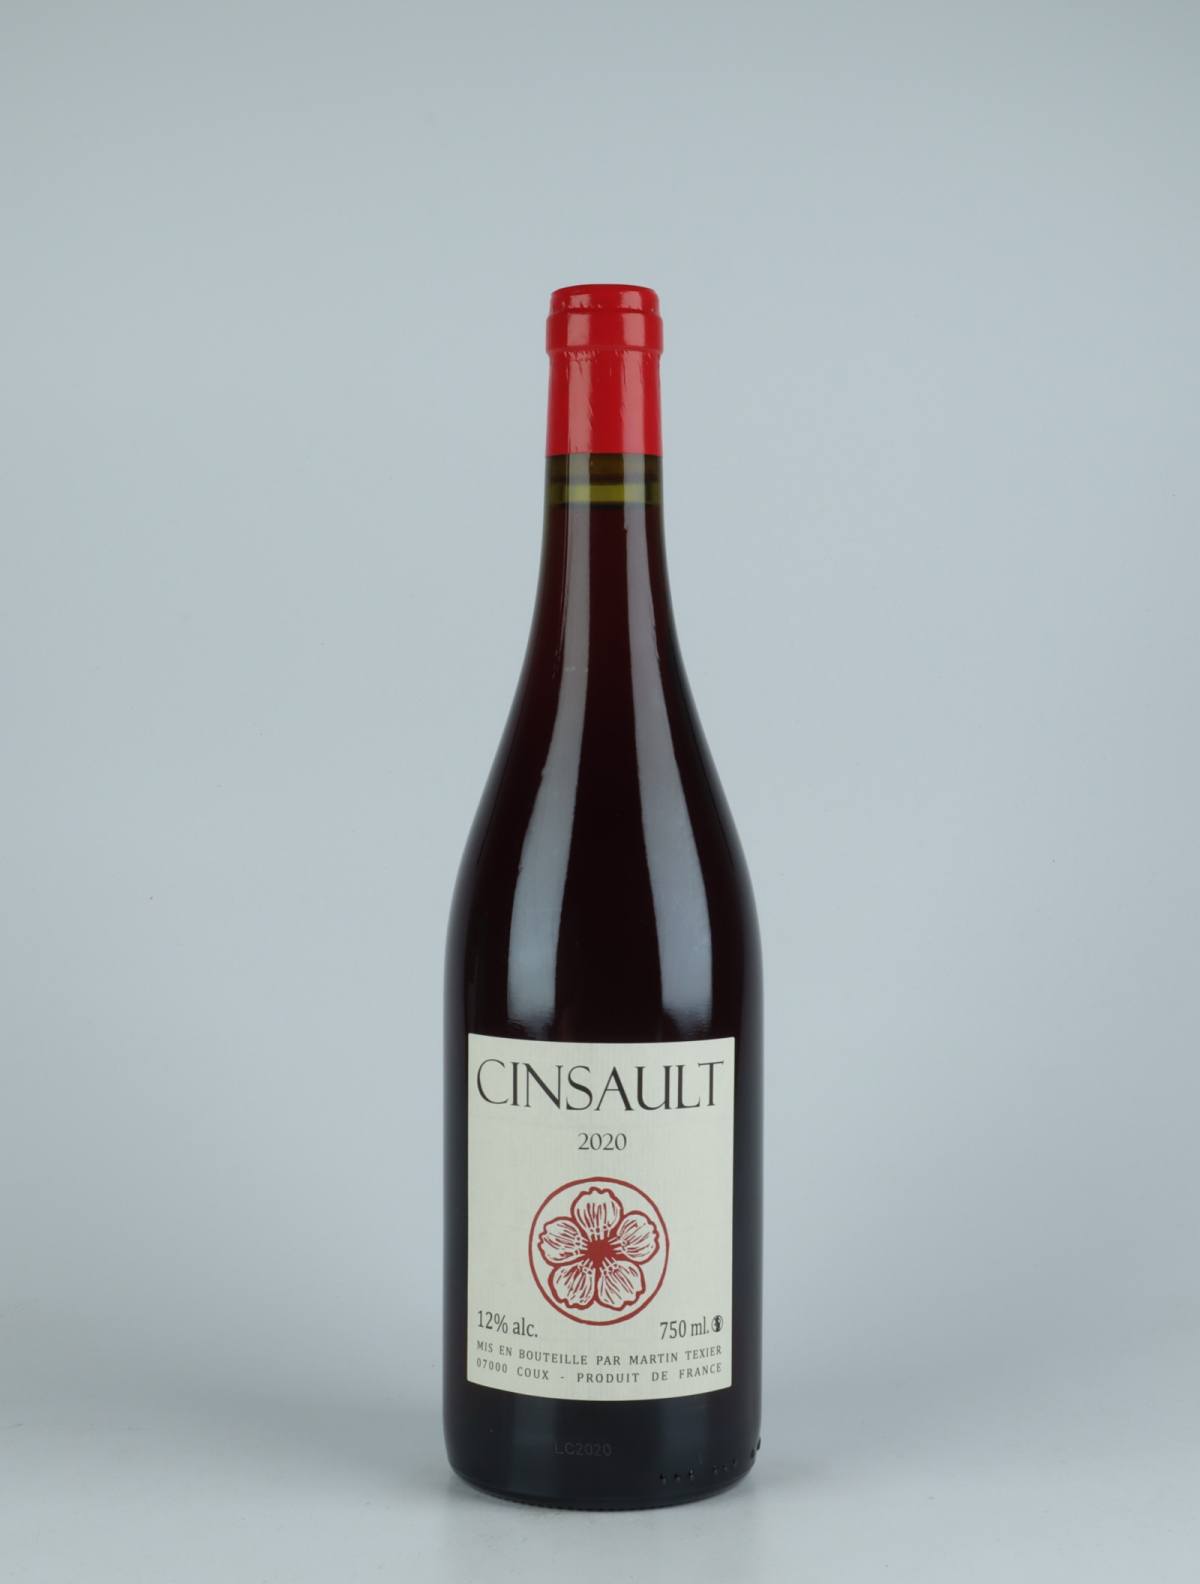 A bottle 2020 Cinsault Red wine from Martin Texier, Rhône in France